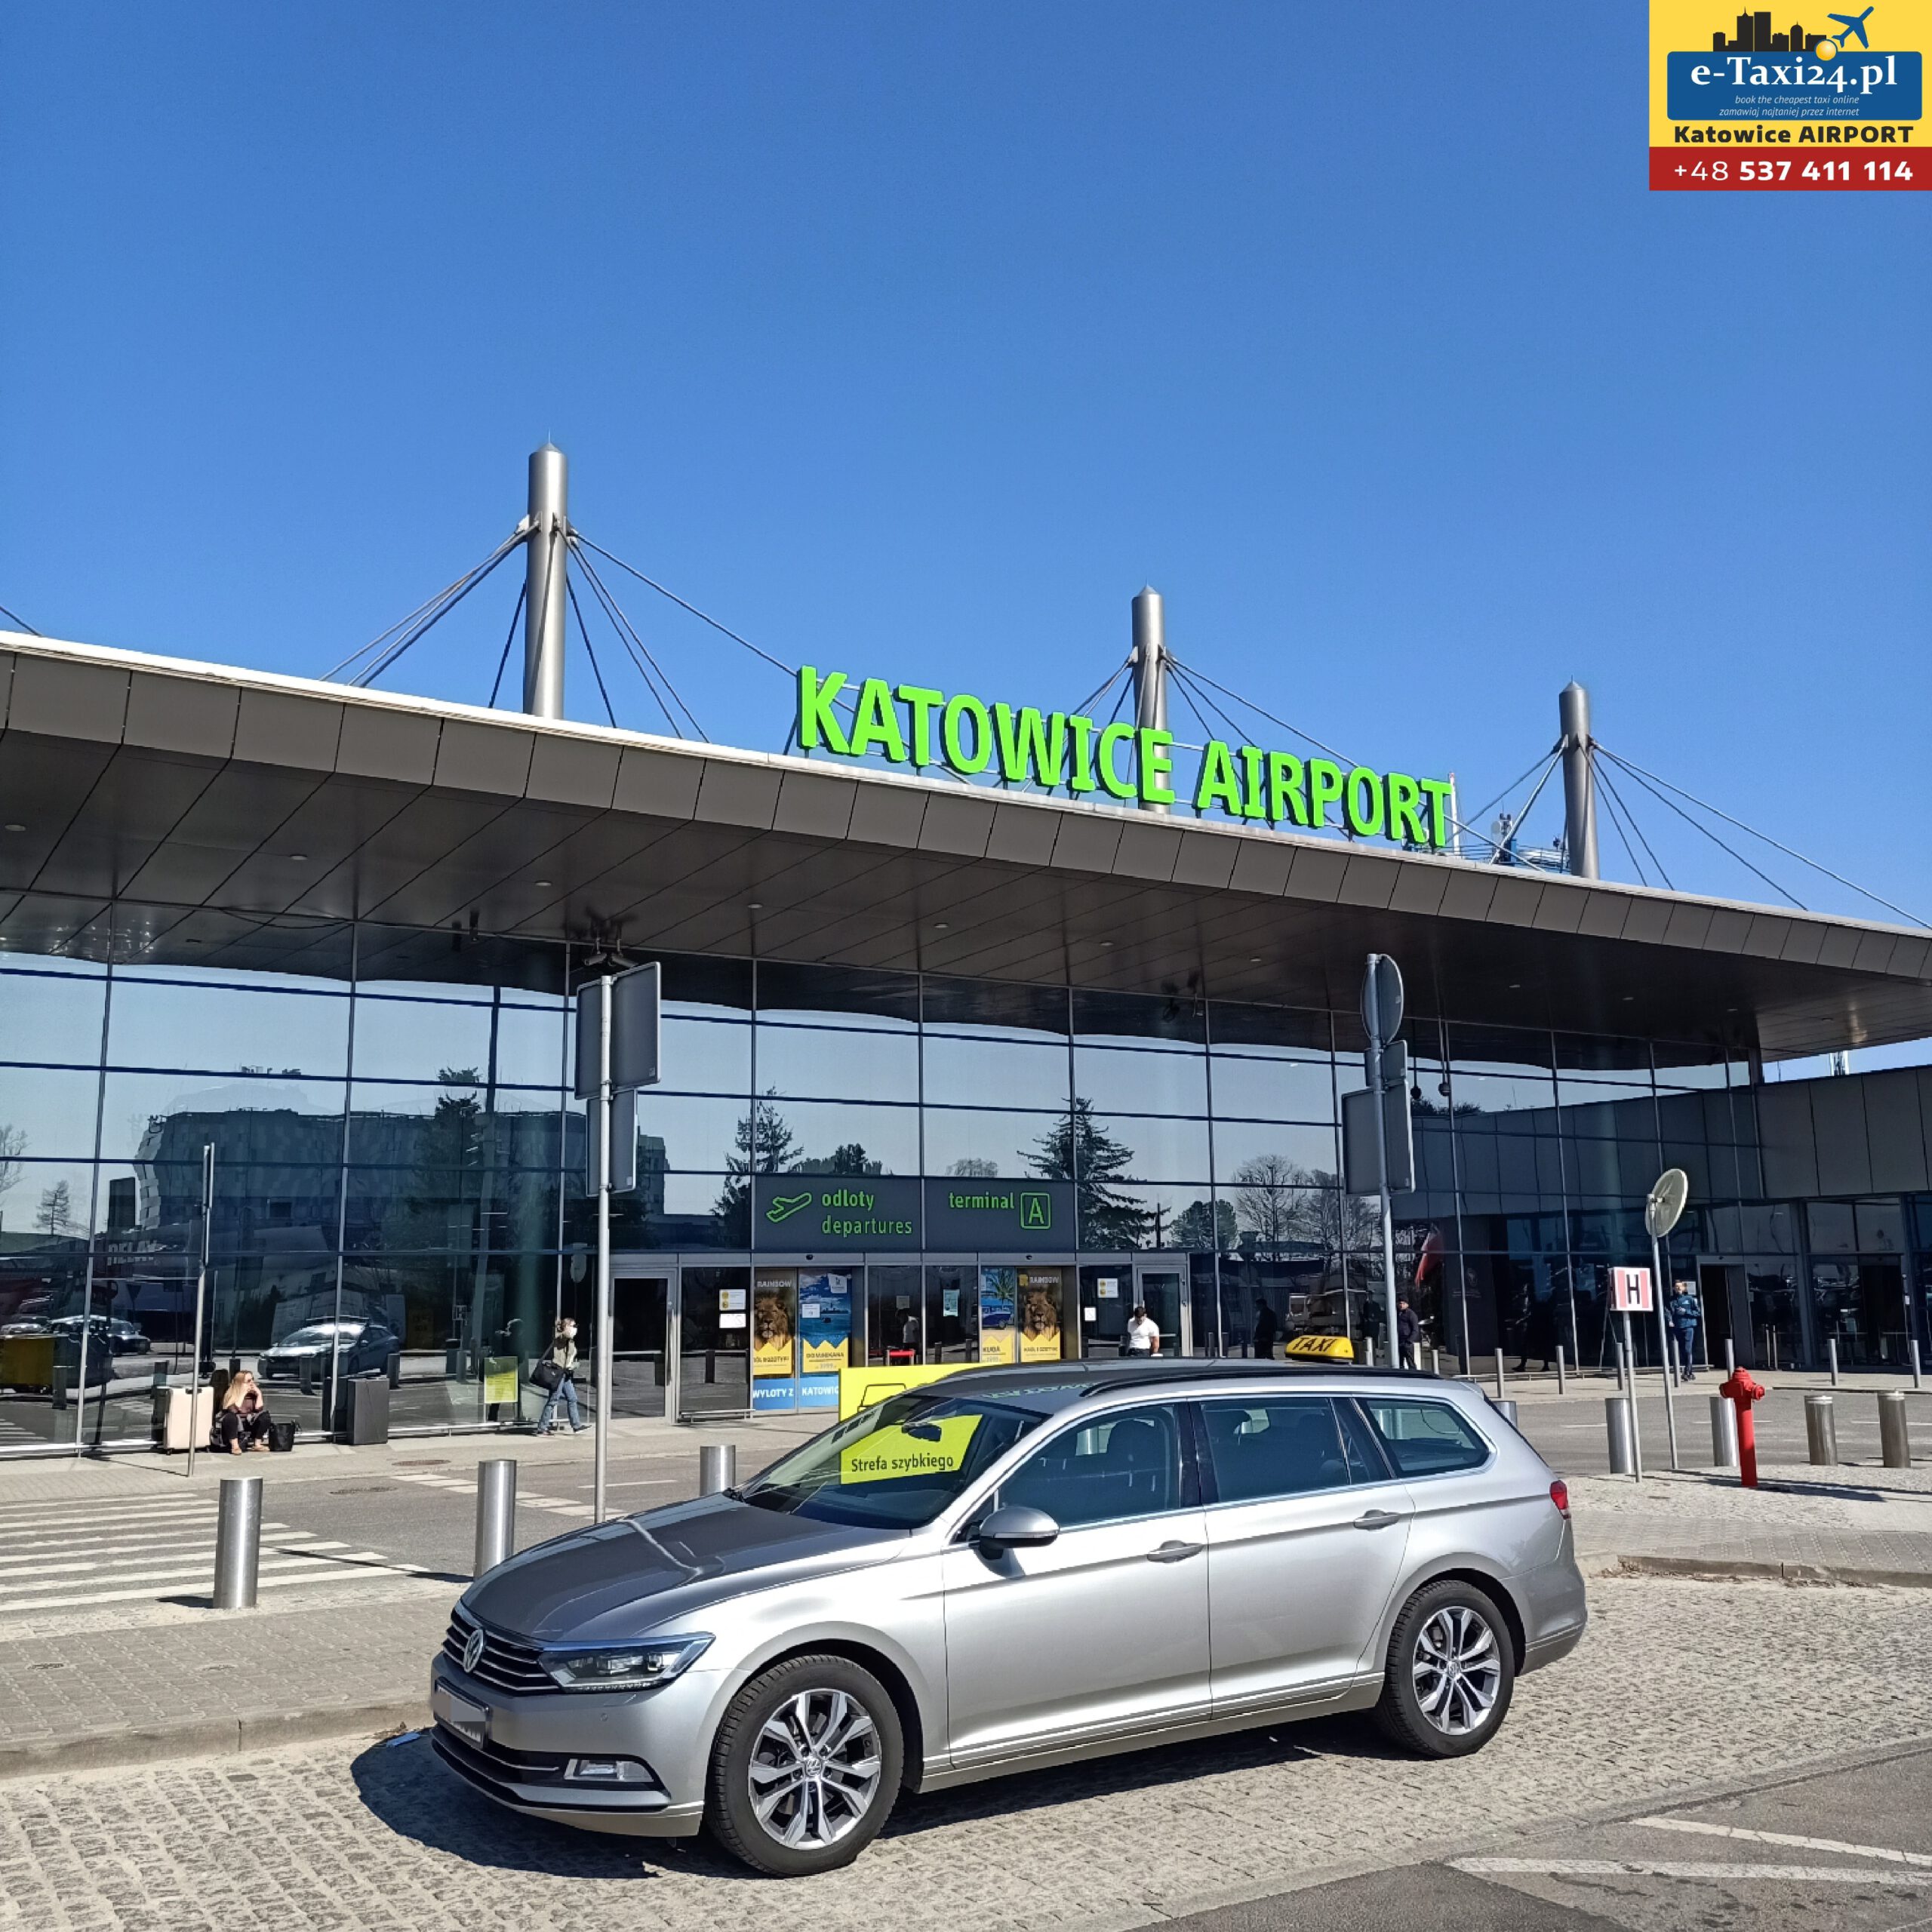 Taxi Airport Katowice - GB, US 3